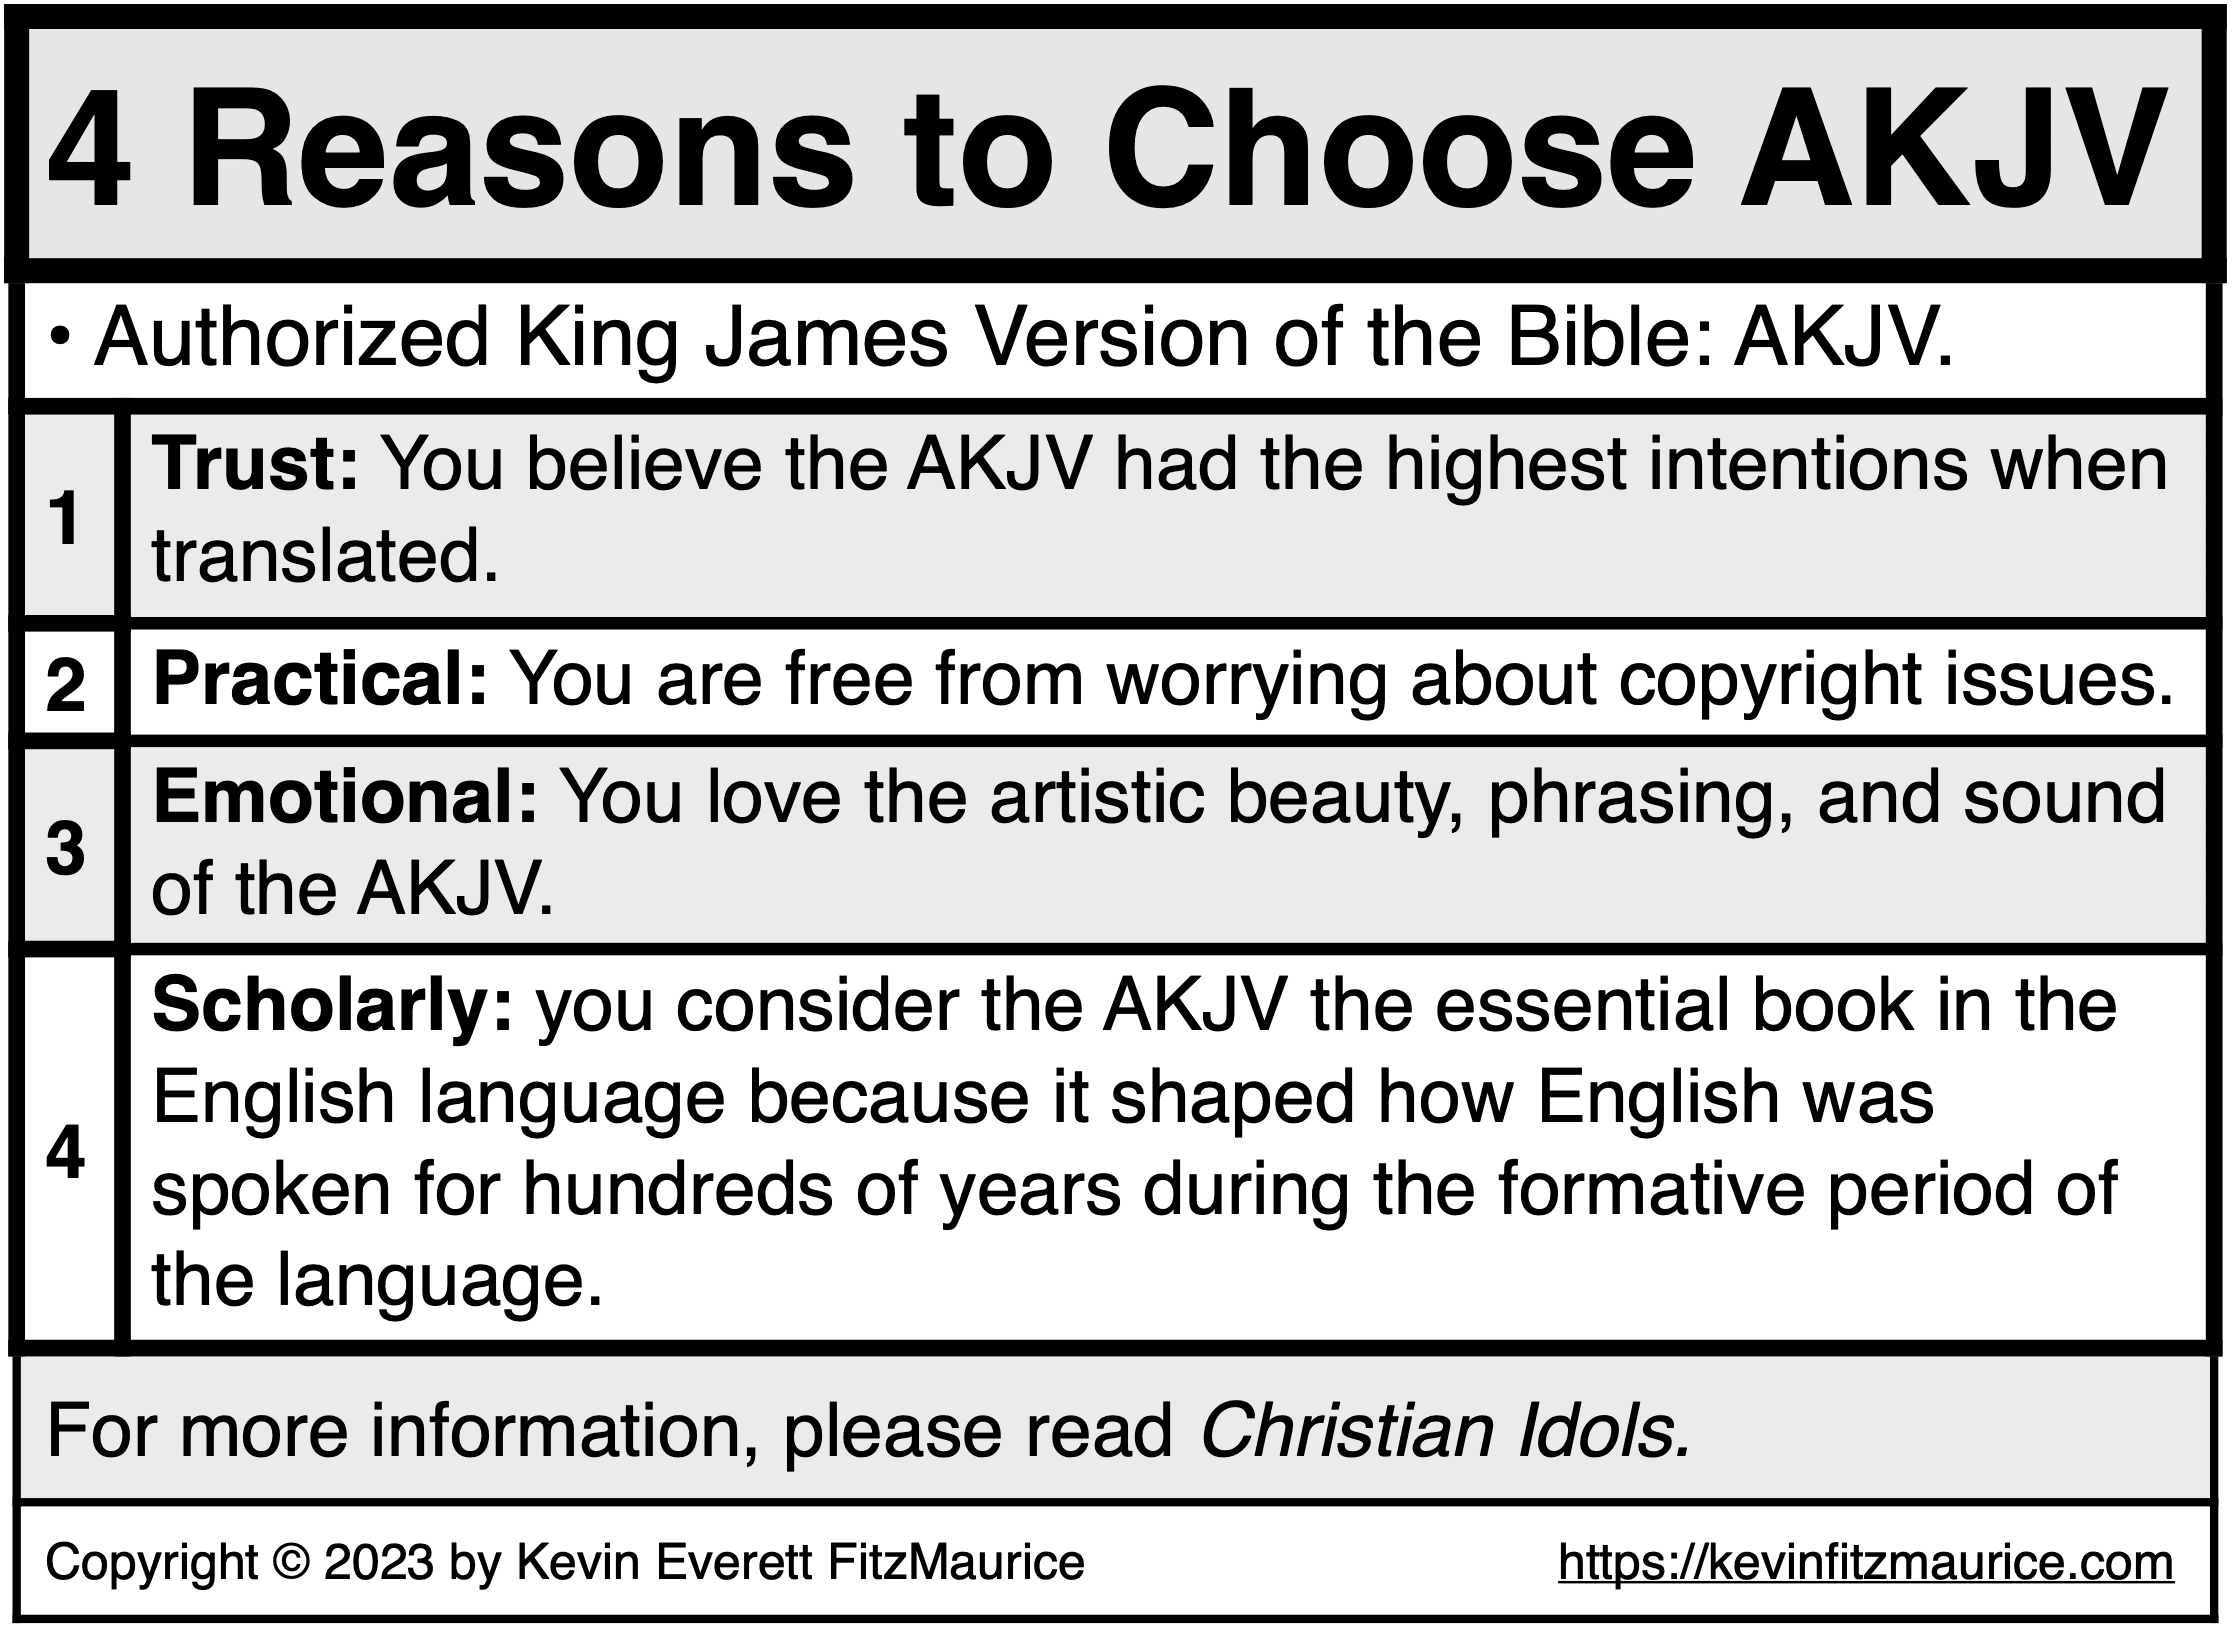 Fast-Facts Christian Idols 4 Reason to choose AKJV